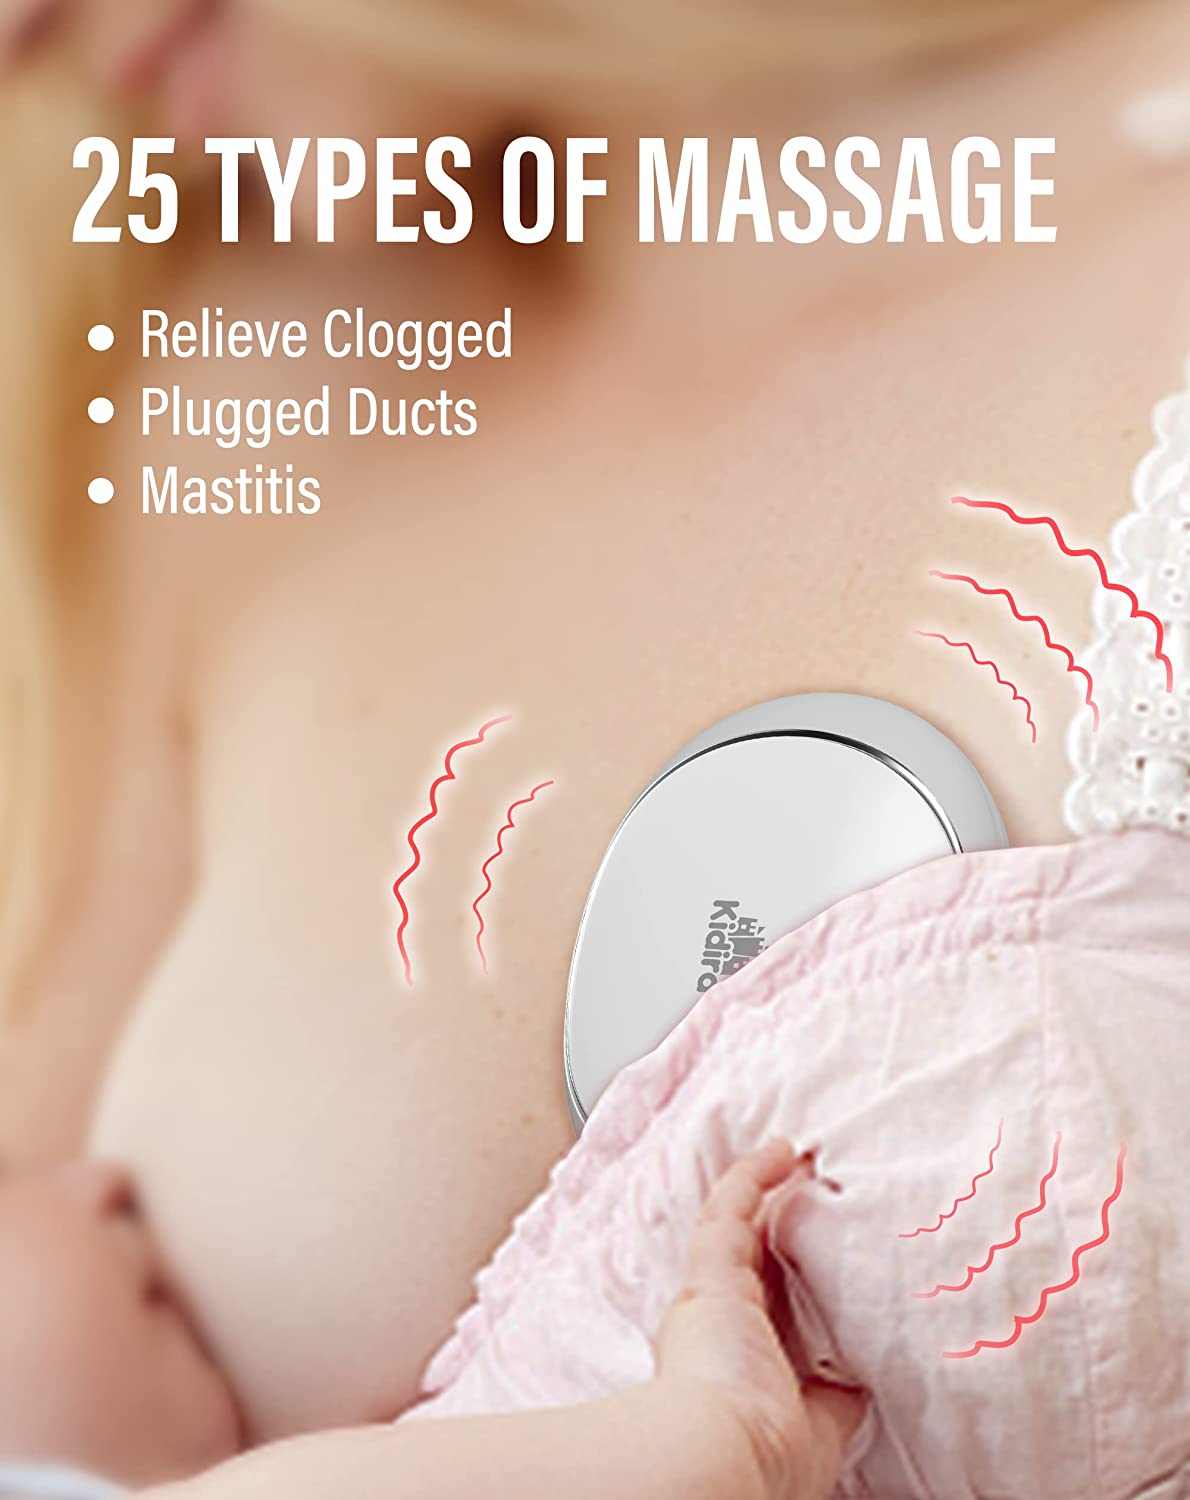 Kisdream Warming Lactation Massager for Breastfeeding